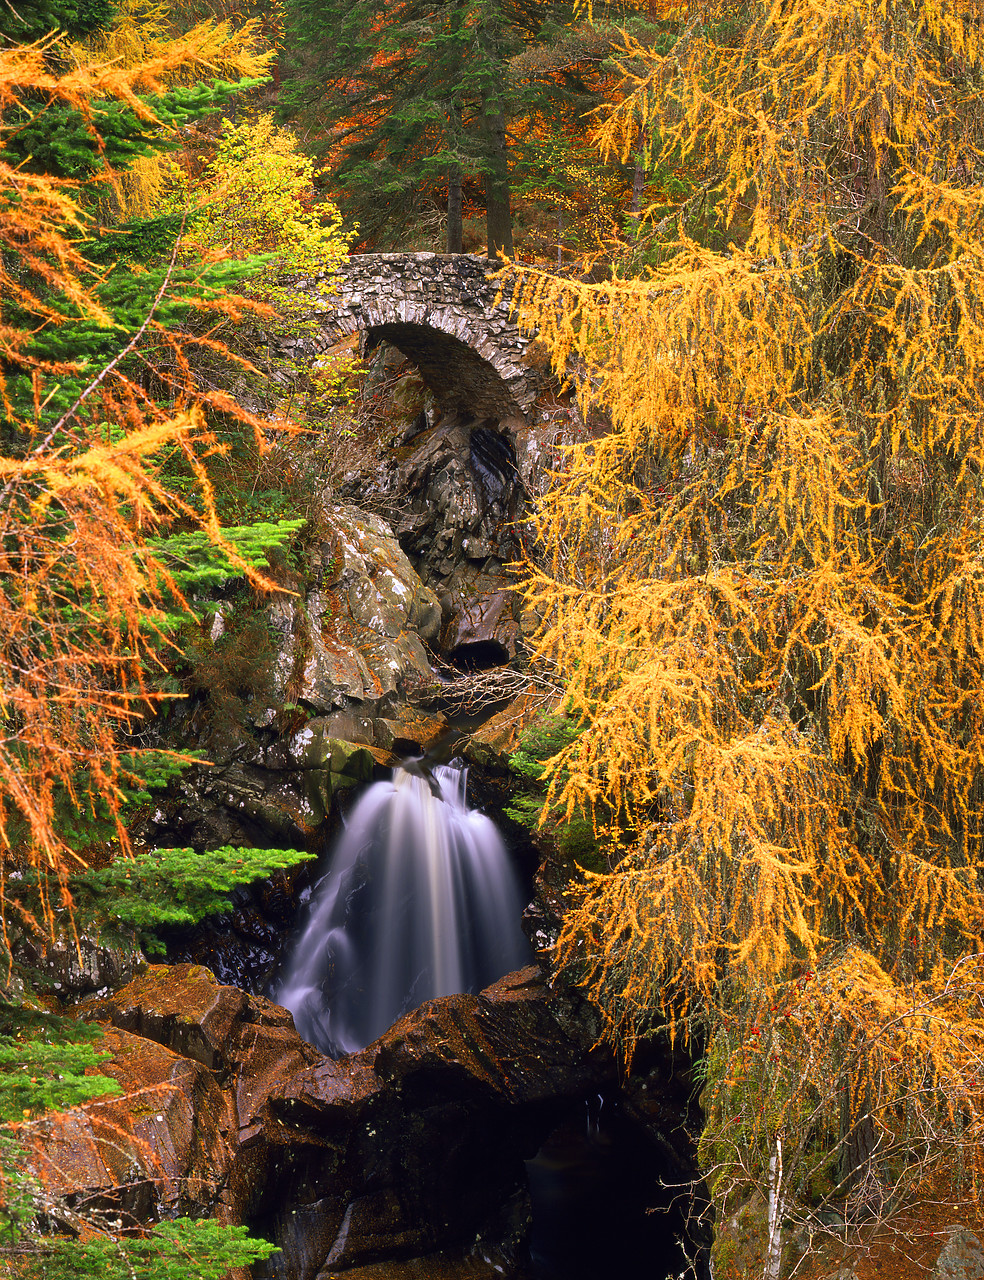 #060725-4 - Falls of Bruar in Autumn, Tayside Region, Scotland